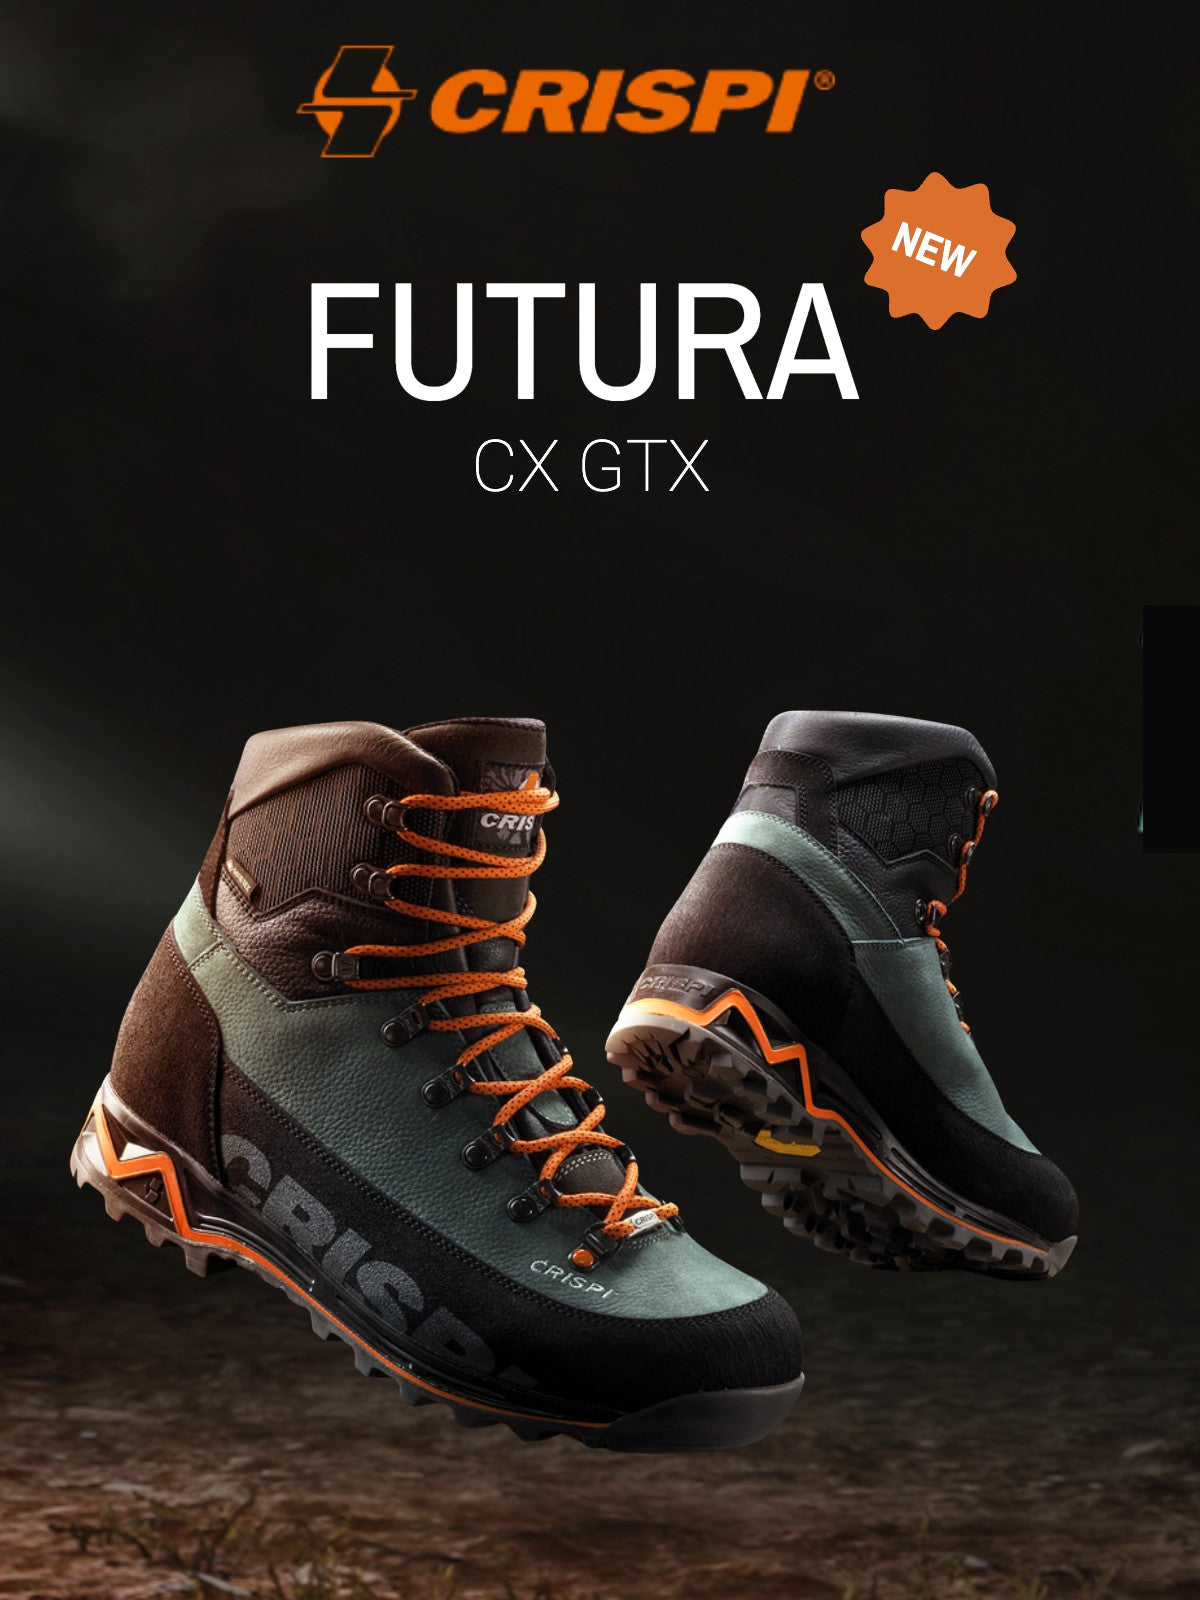 New Crispi Futura CX GTX Boot